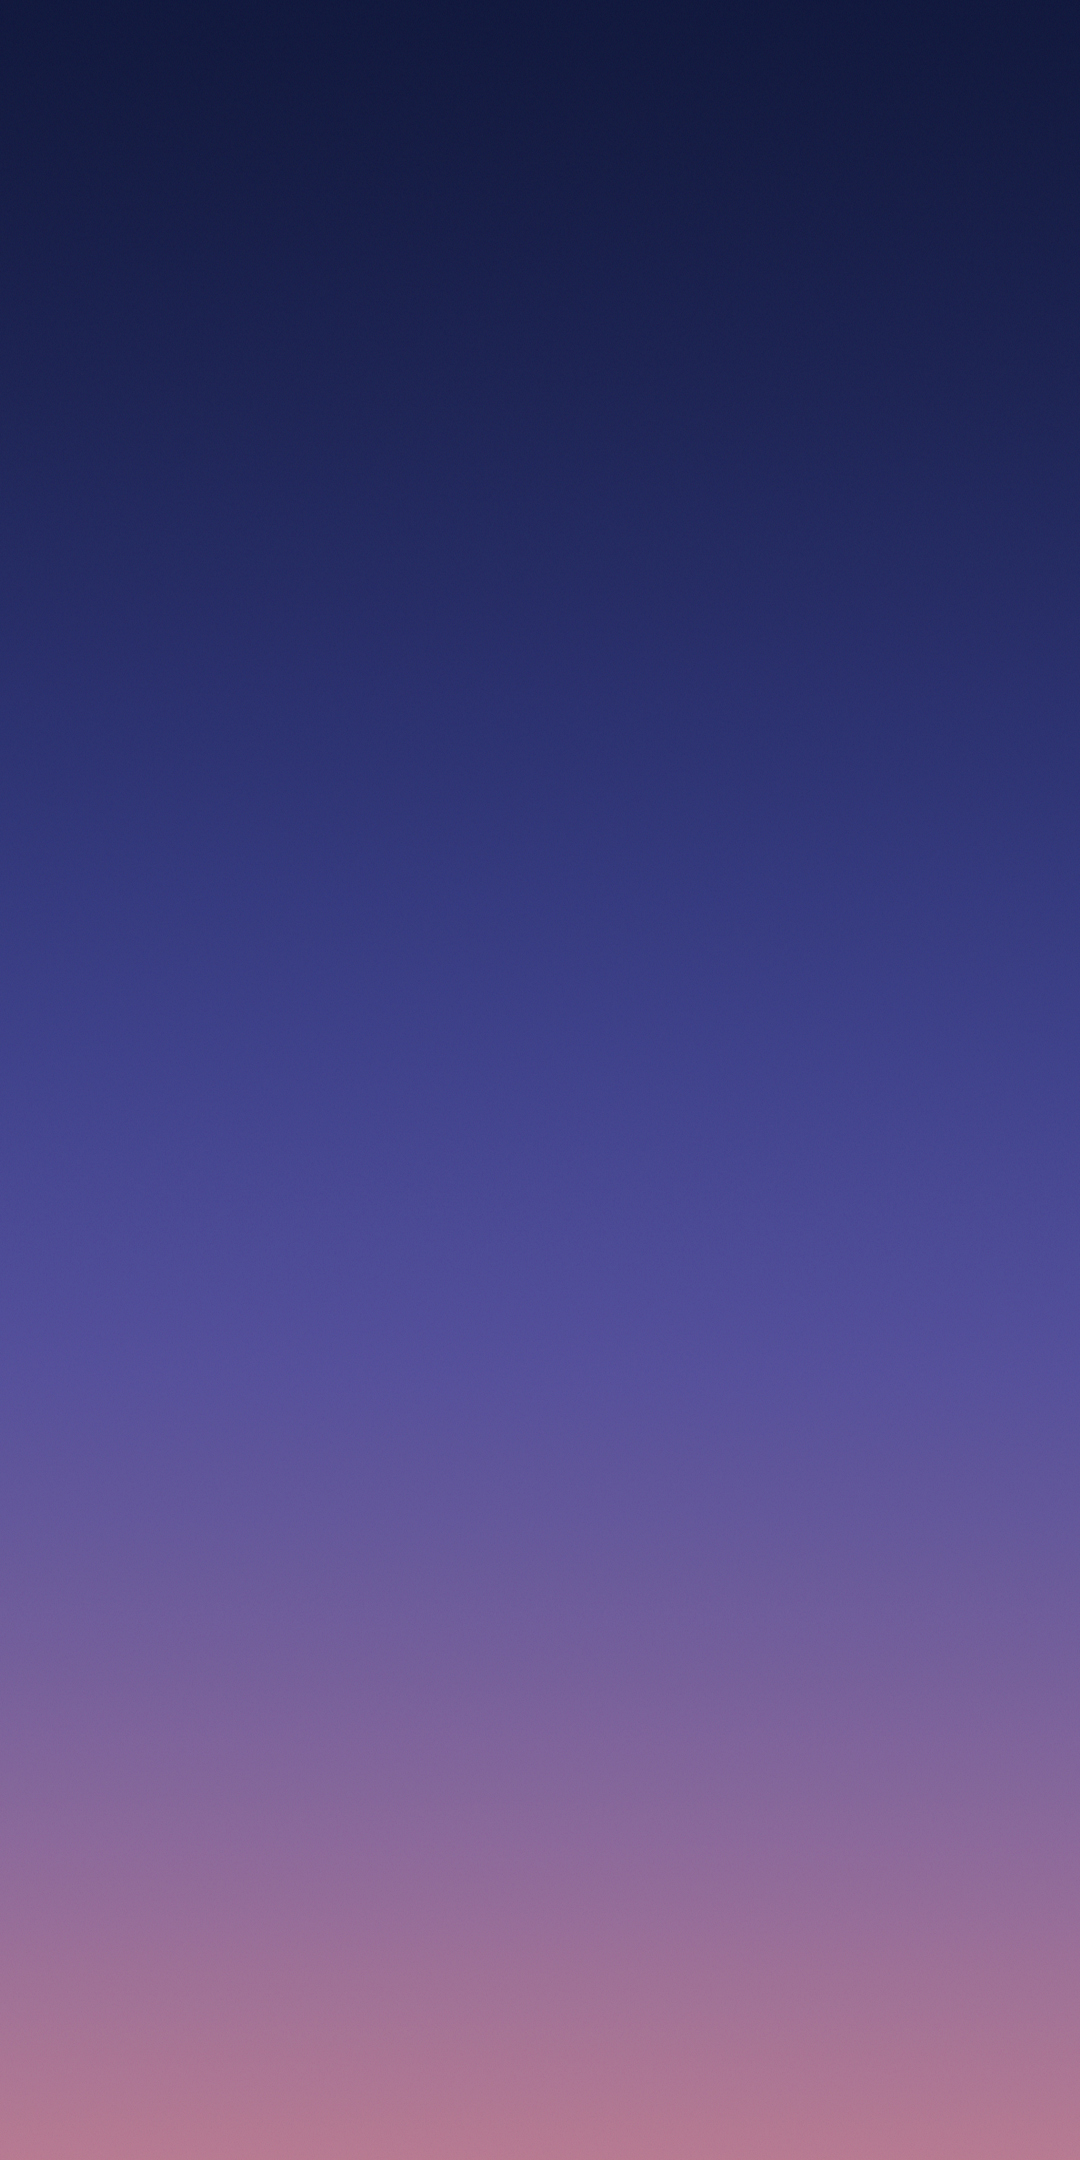 mi max壁紙,空,青い,バイオレット,紫の,昼間